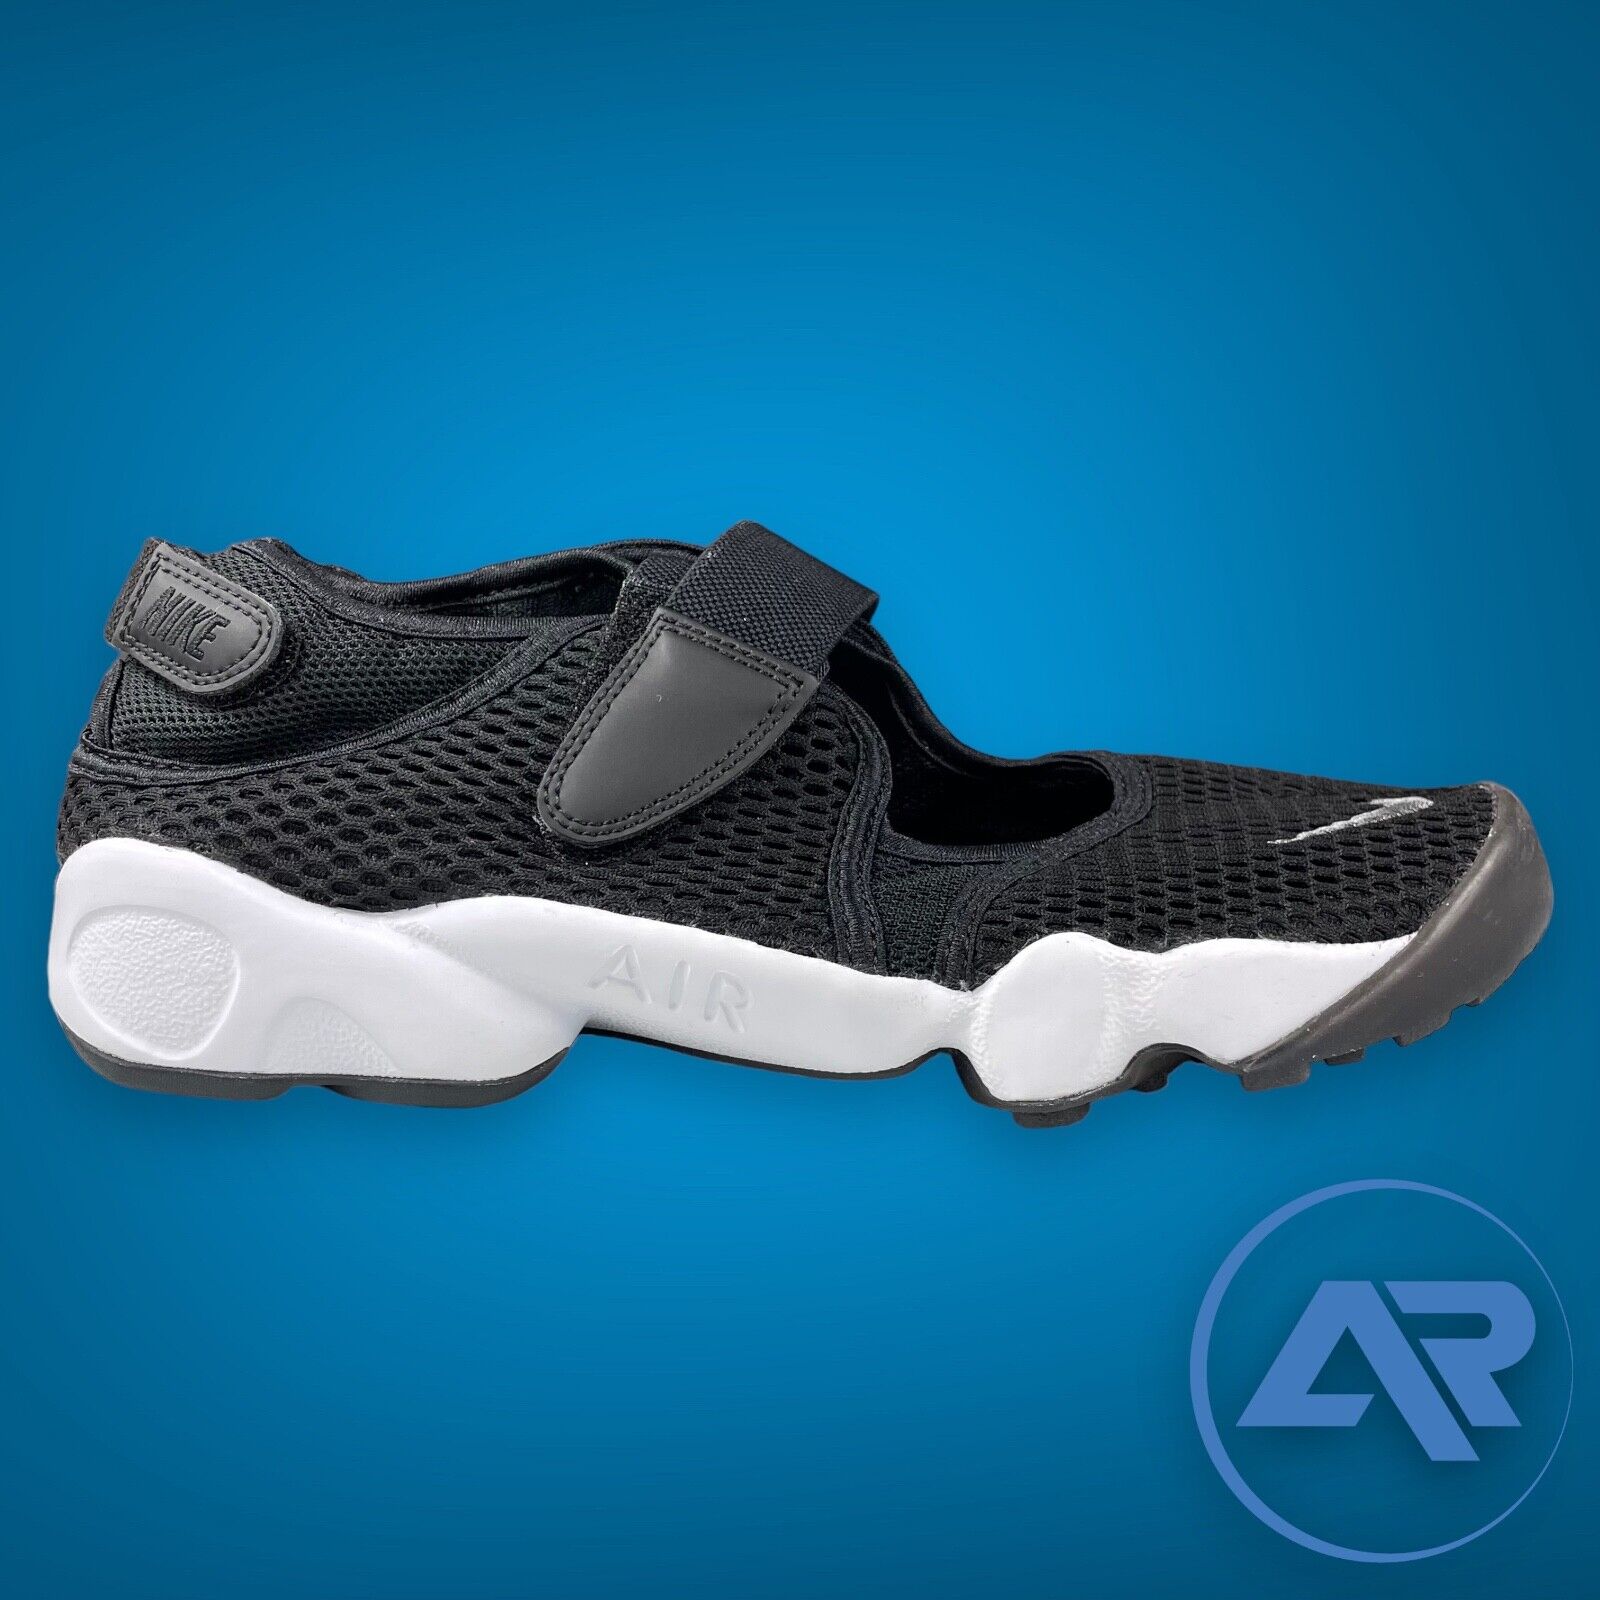 NEW NIKE Air Rift BR Aqua Shoes Black White Women's Size 10 848386-001 820652394803 | eBay